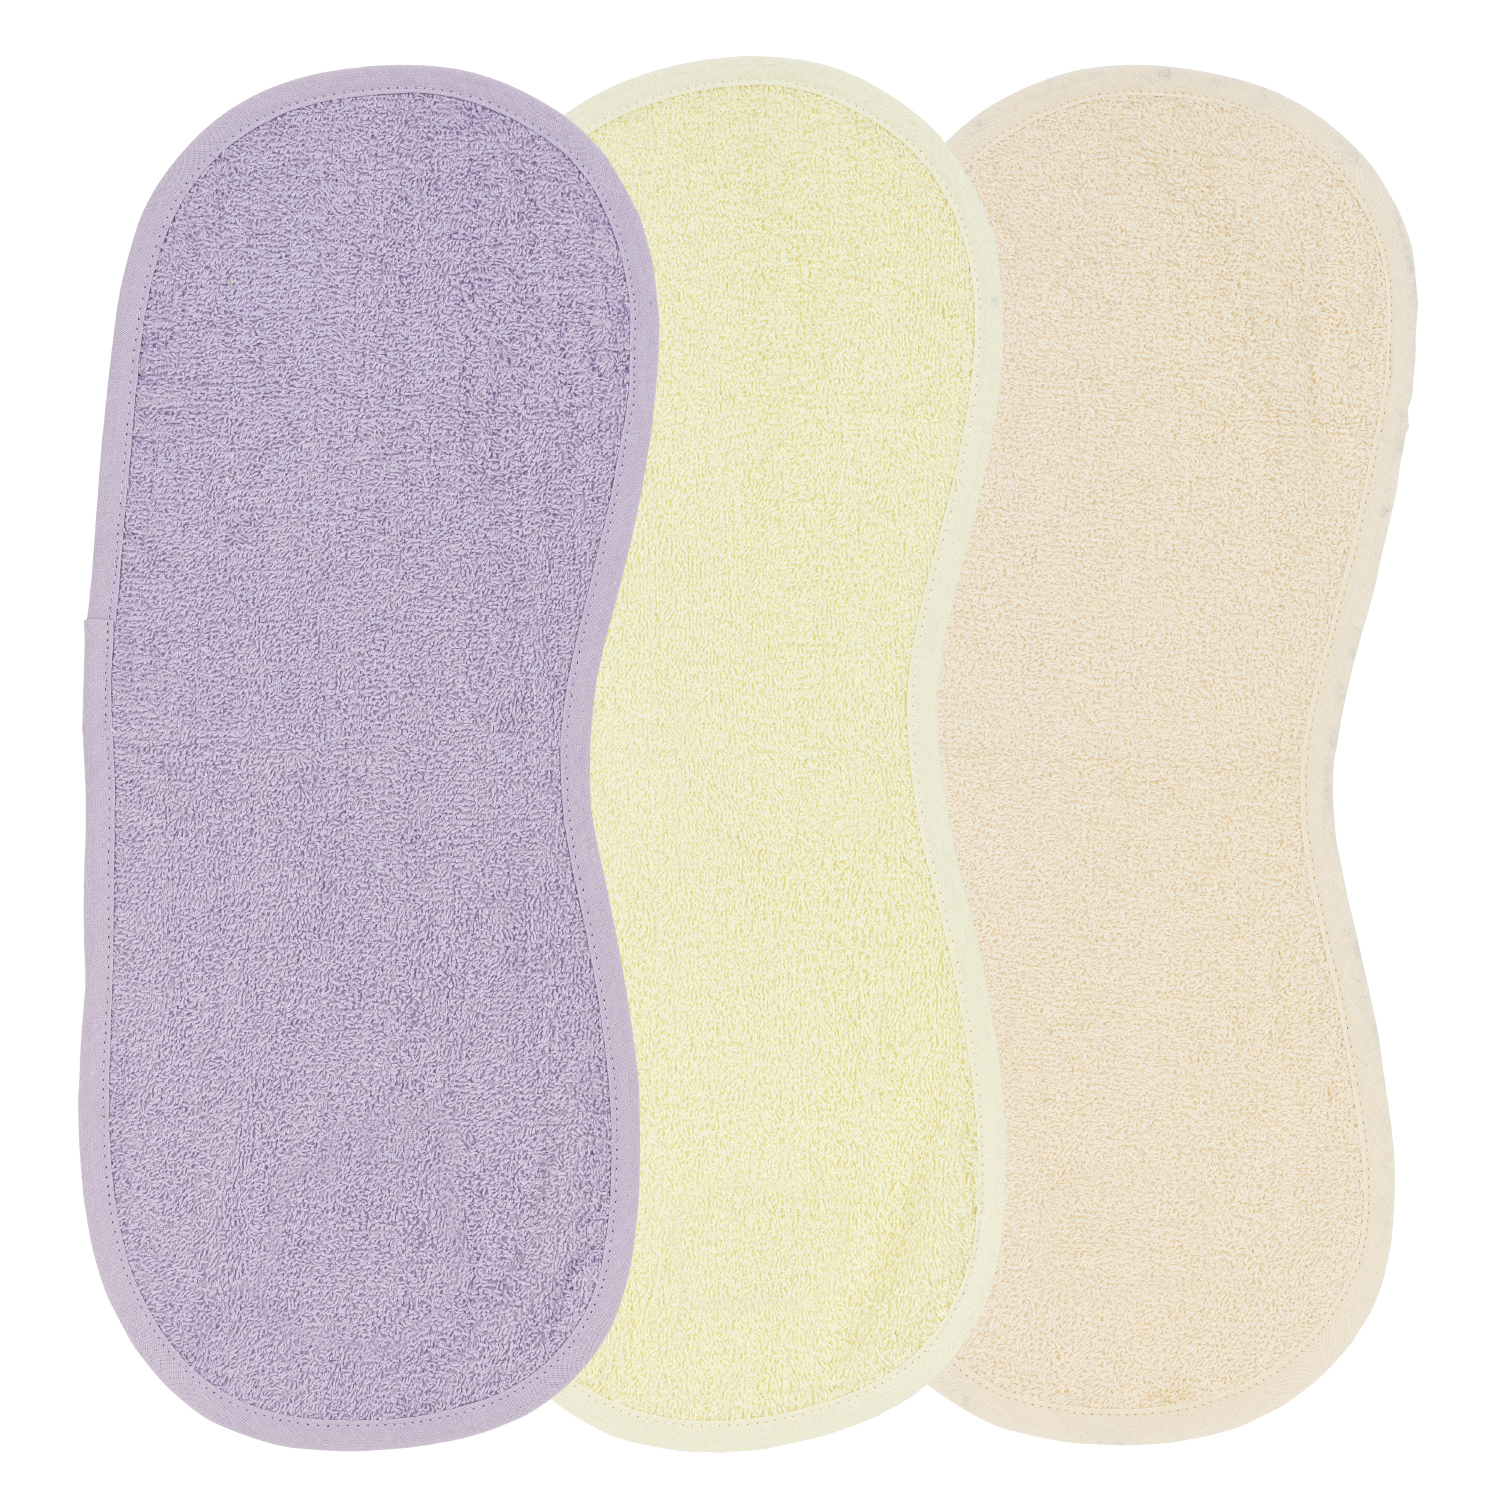 Basic Terry Burp Cloths Shoulder Model 3-pack  - Soft Lilac/Soft Yellow/Soft Peach - 53x20cm